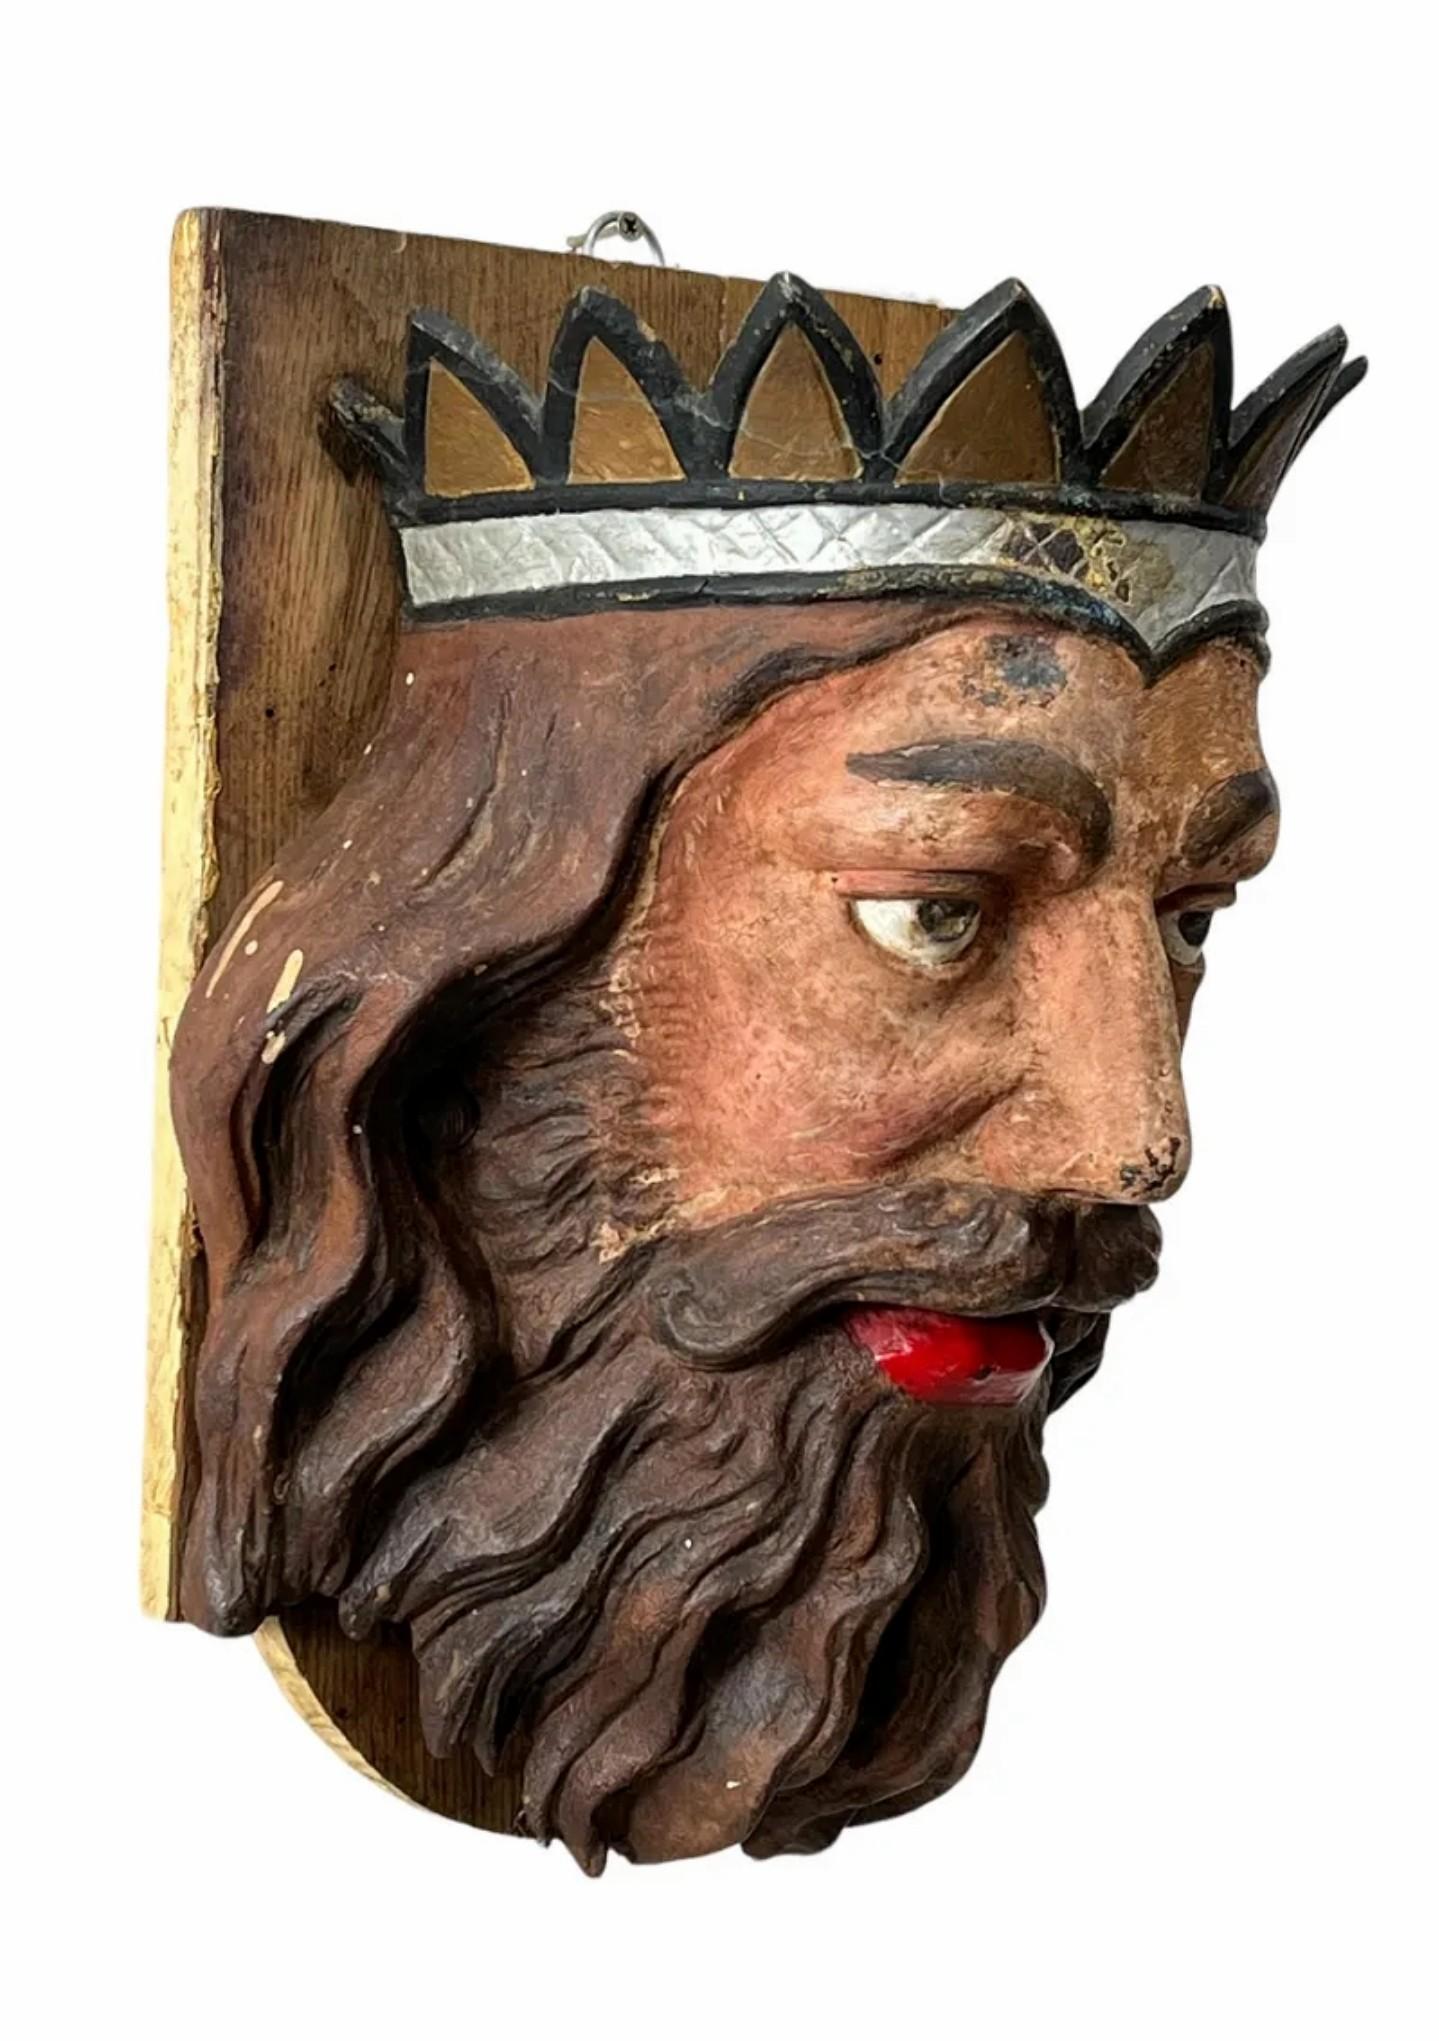 European 19th Century Carousel Ornament Painted Cast Iron King Mask Amusement Folk Art For Sale